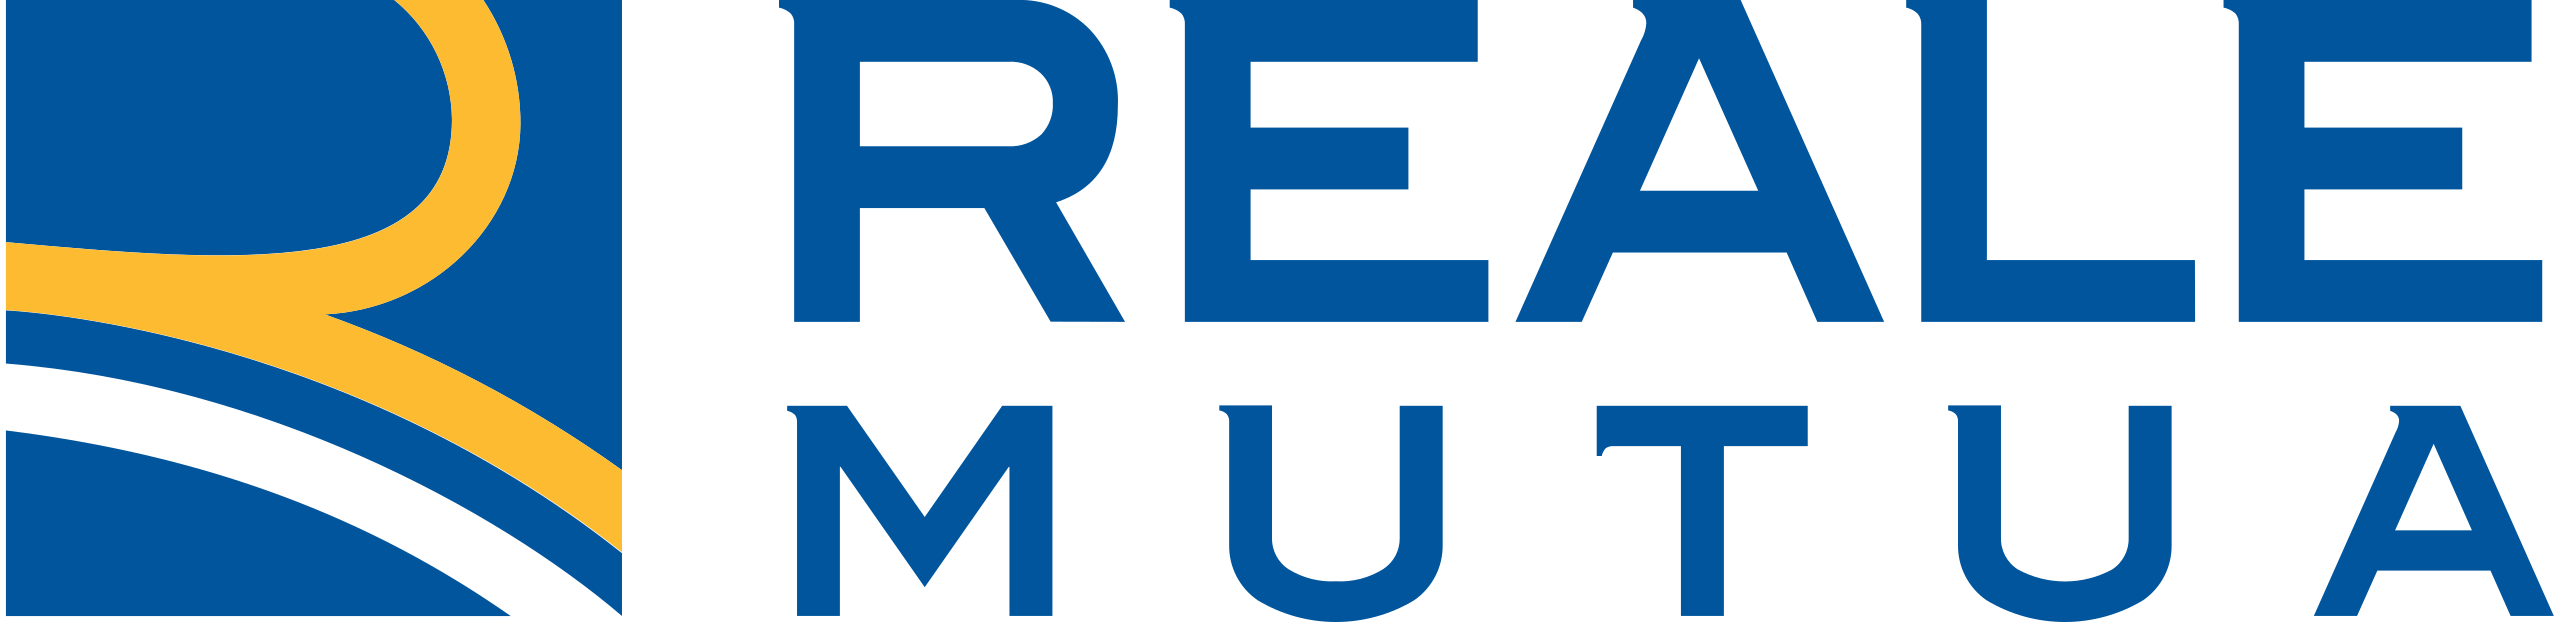 Reale mutua logo